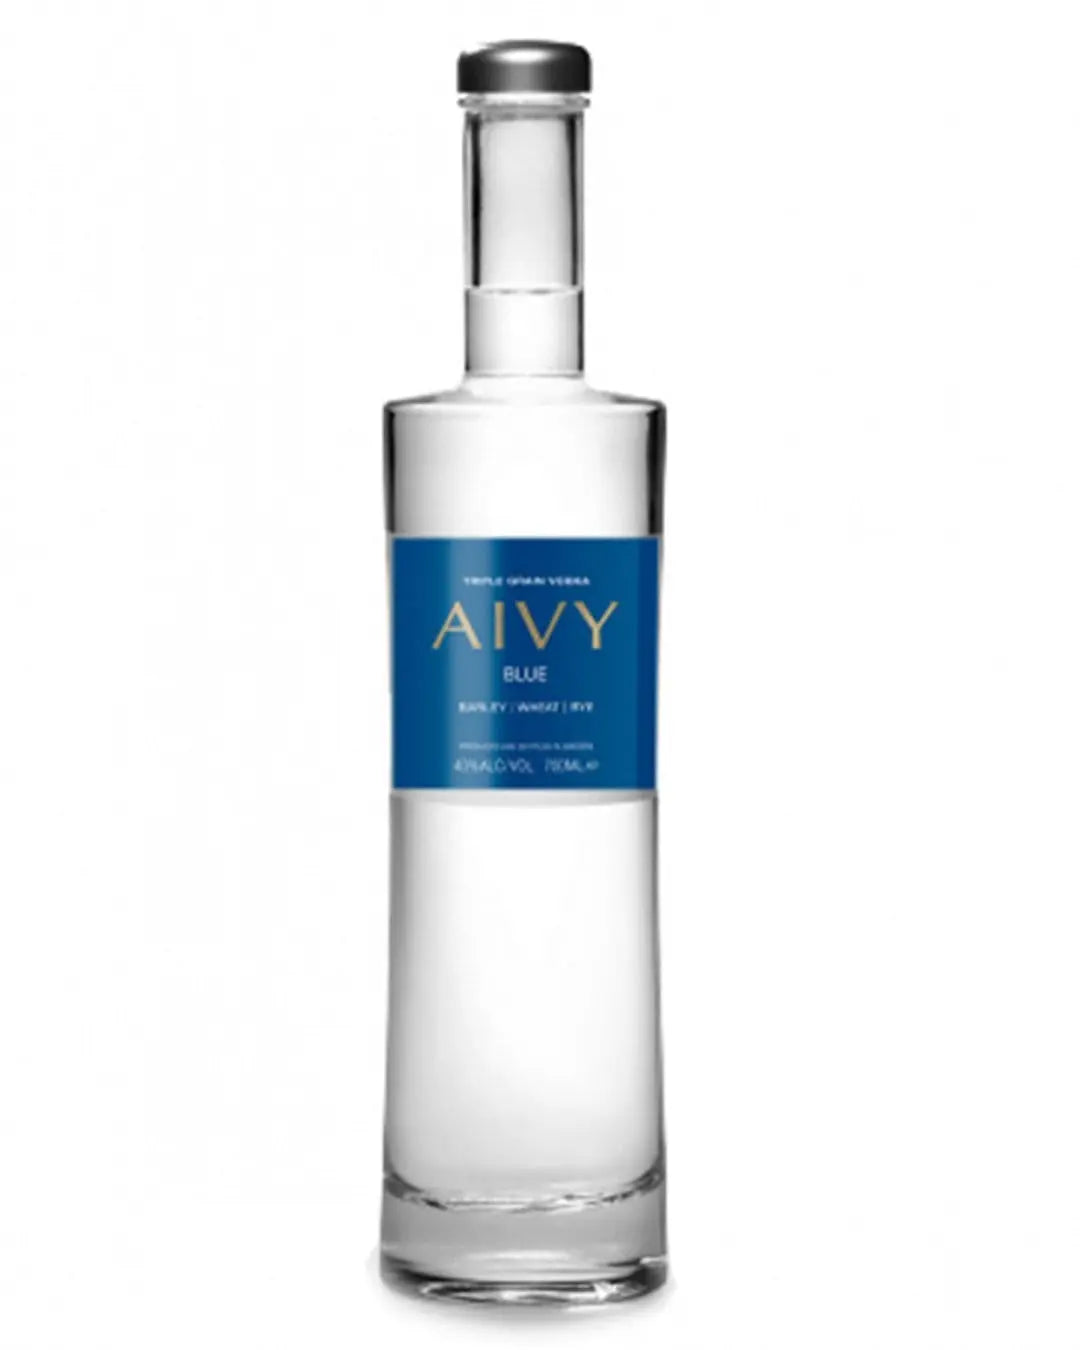 Aivy Blue: Barley, Wheat & Rye Triple Flavoured Vodka, 70 cl Vodka 7350012080112